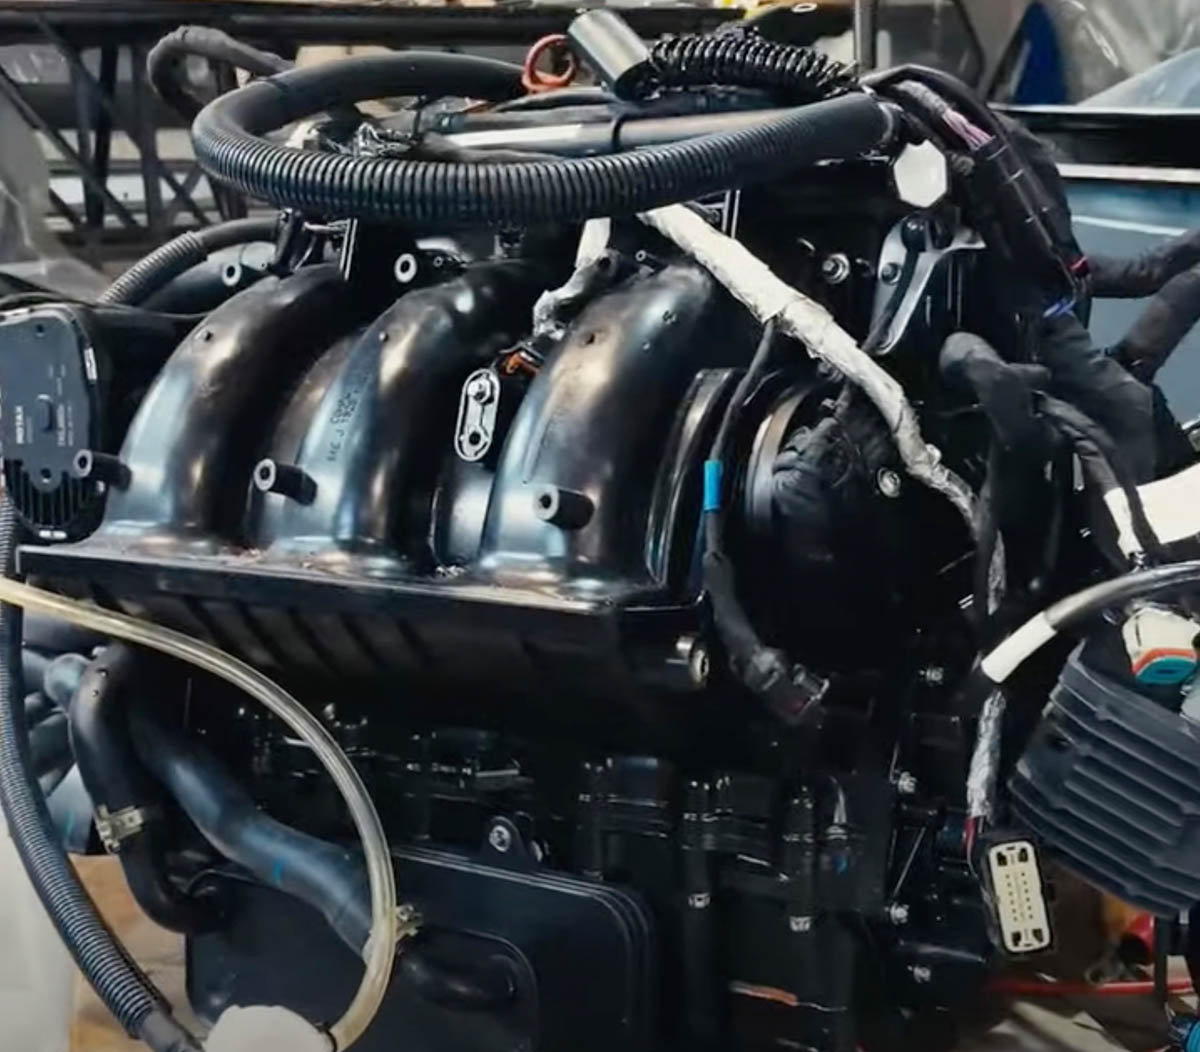 Двигатель компании Rotax. Скриншот видео Militarnyi Videonews/YouTube